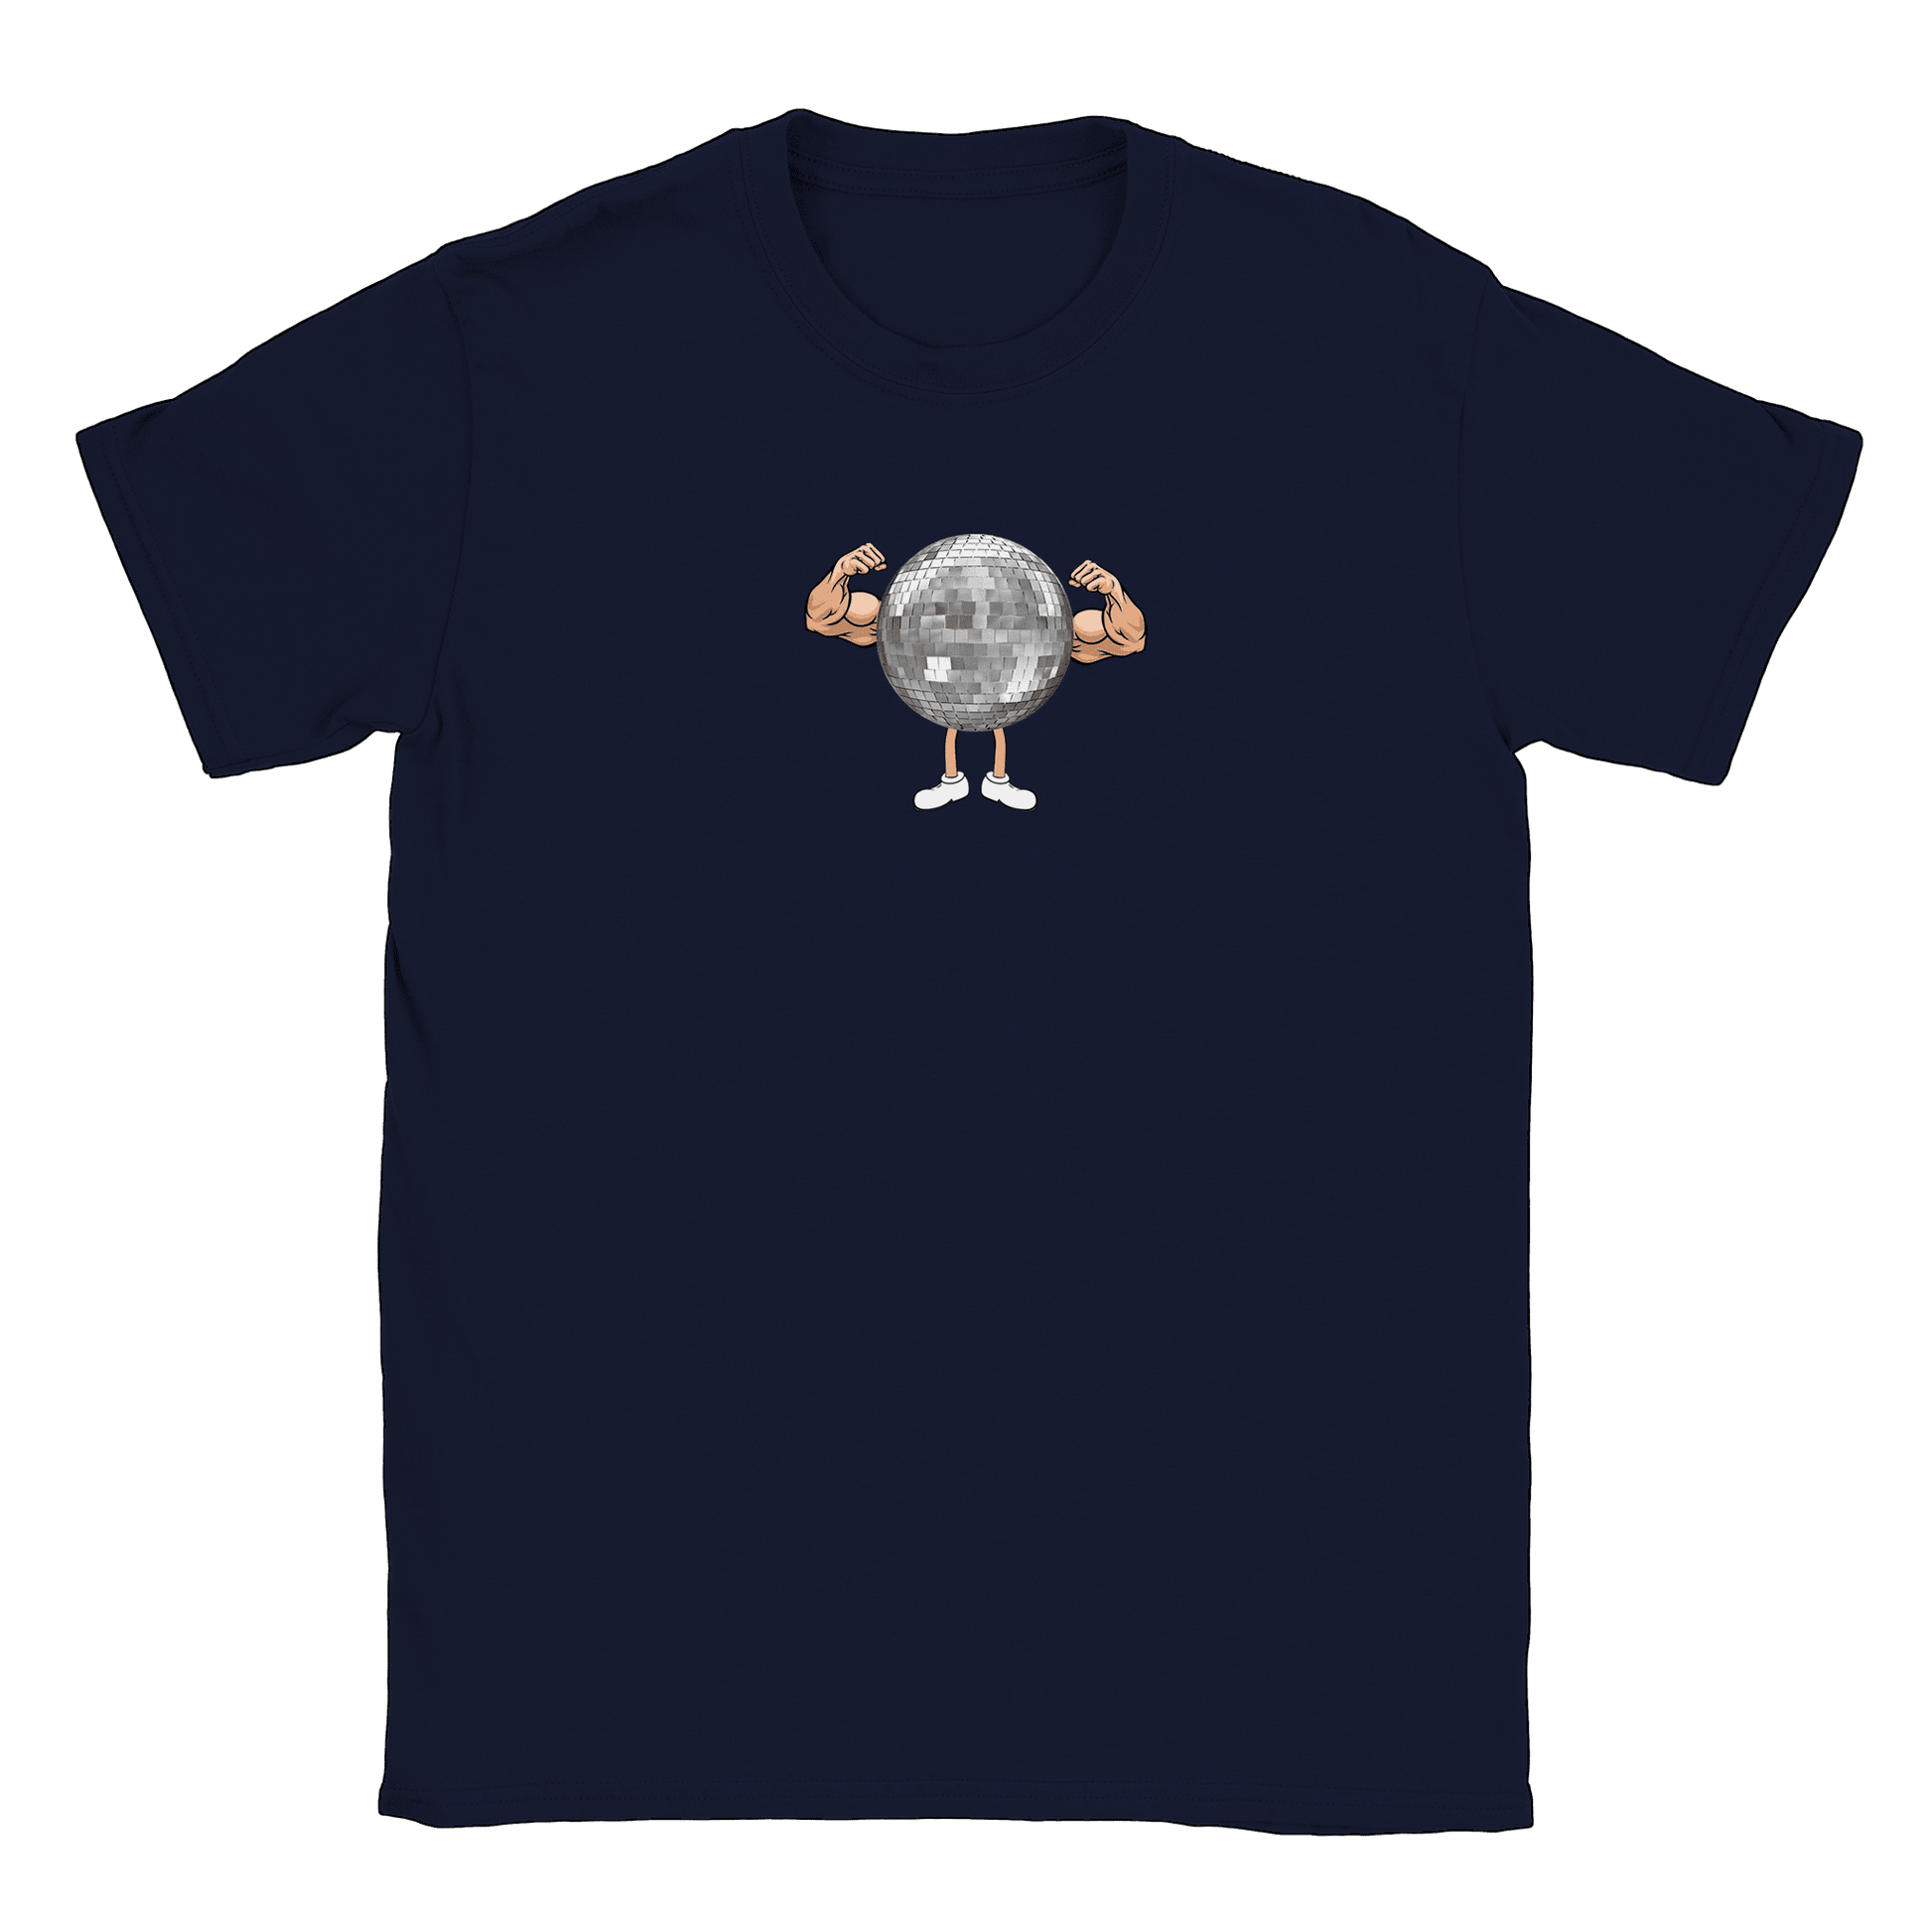 Discogymmaren - T-shirt Navy